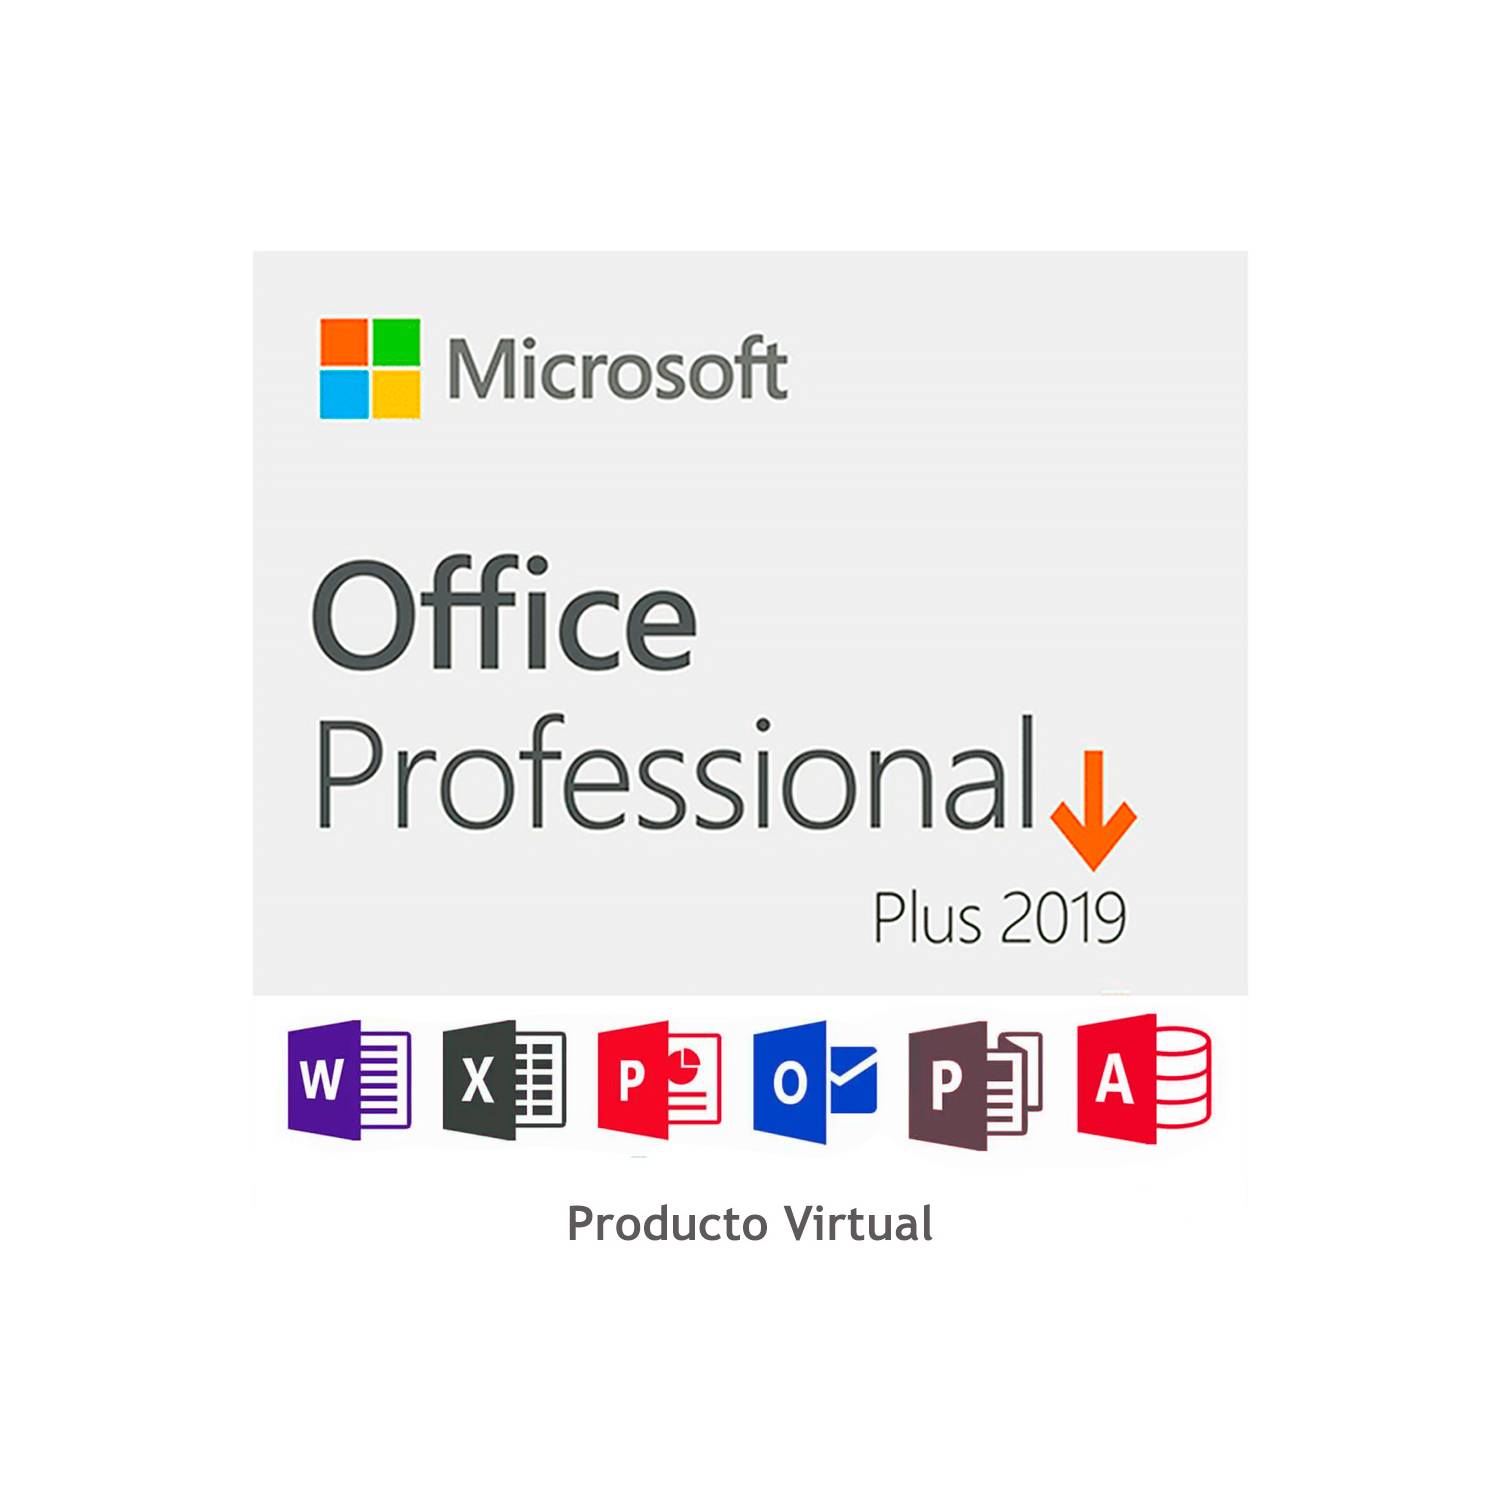 Microsoft Office 2019 professional Plus. Коробка Office 2021 Pro Plus. Office 2019 профессиональный плюс. Office 2019 professional Plus Box.